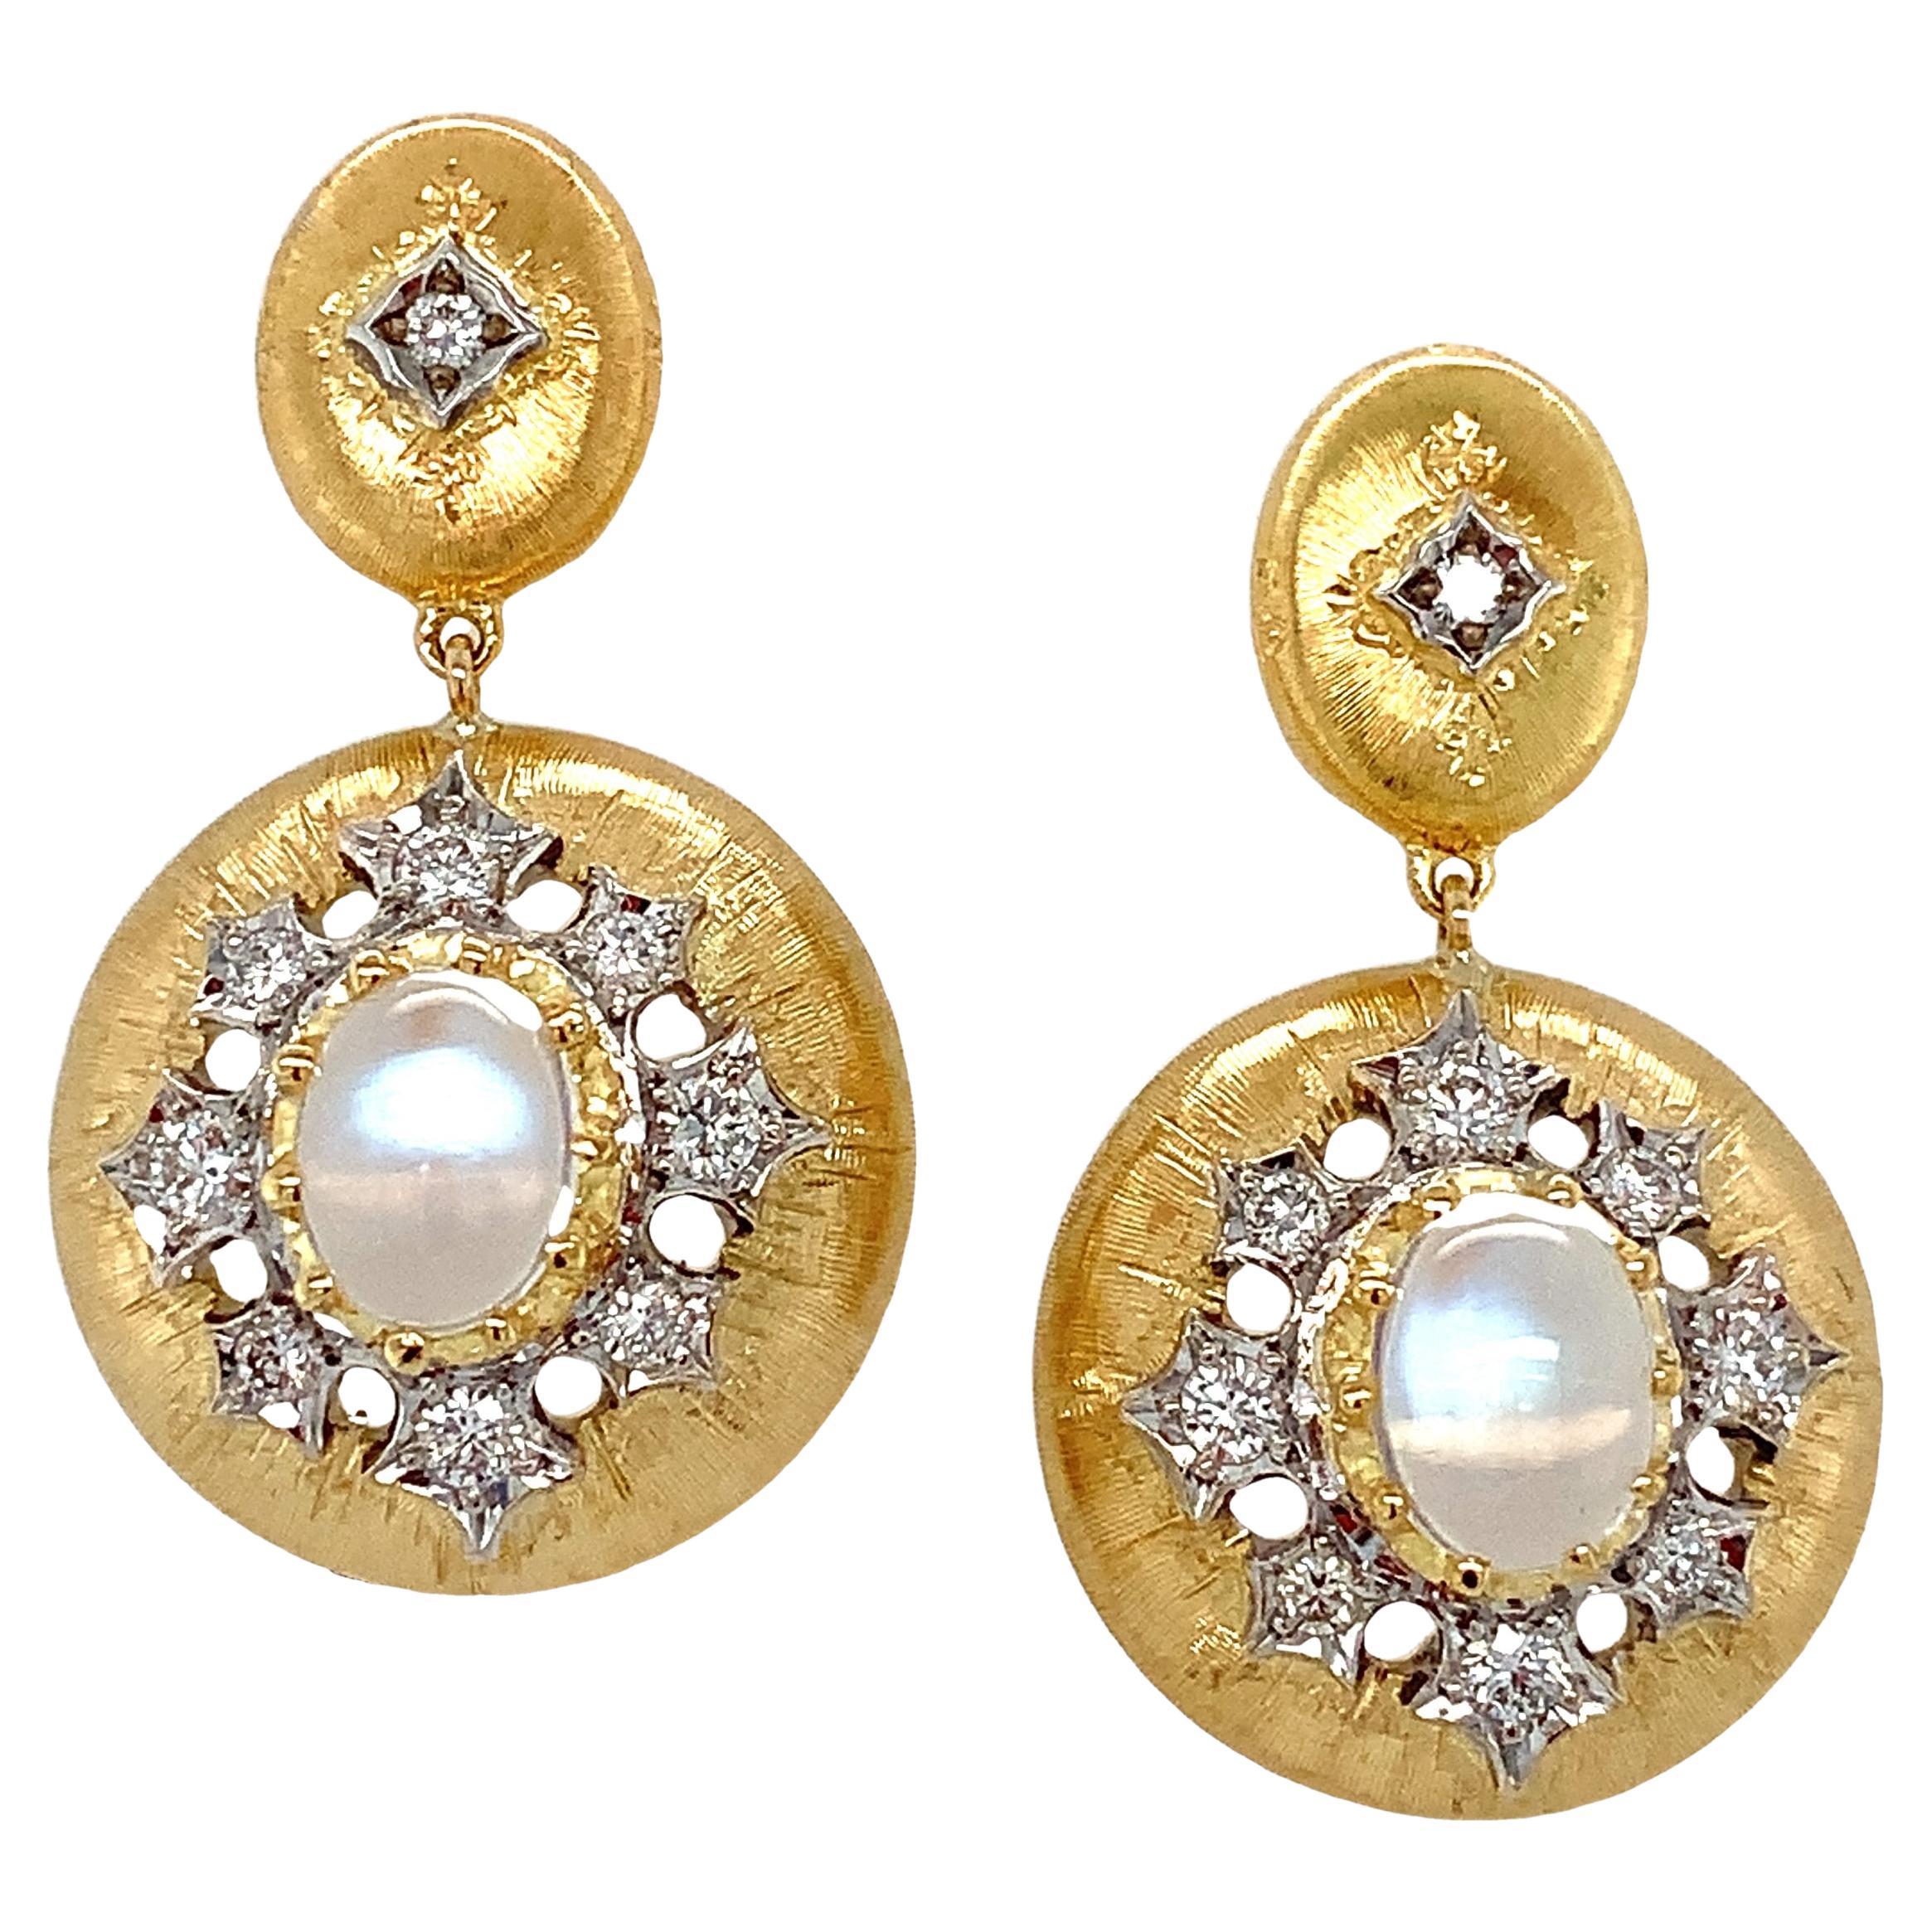 Florentine Design Rainbow Moonstone and Diamond Drop Earrings in Yellow Gold